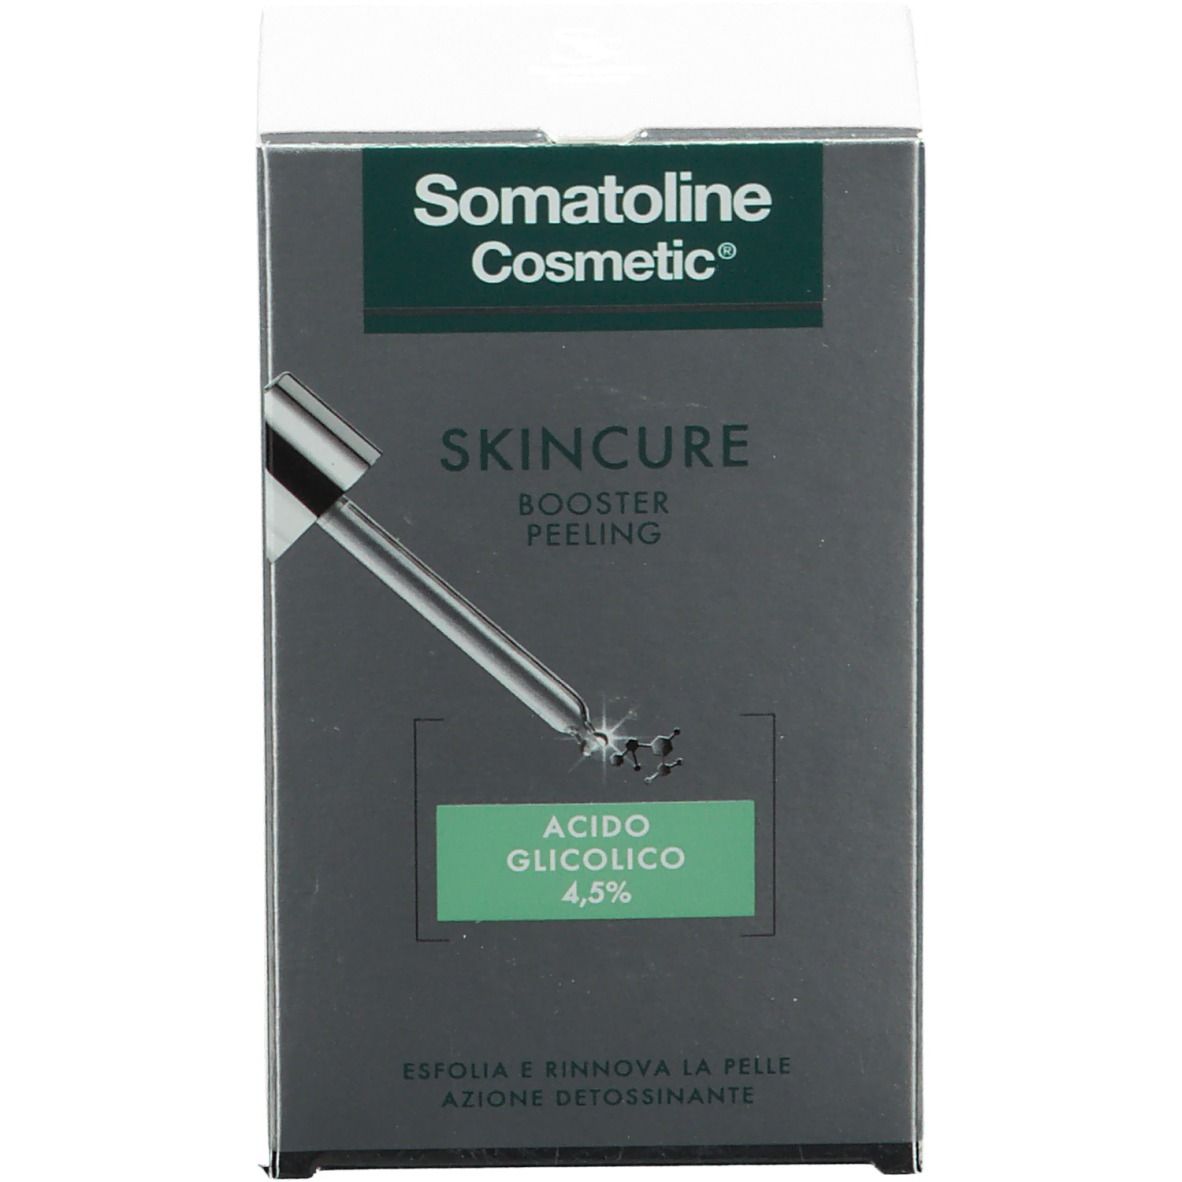 Somatoline Cosmetic® SKINCURE Booster Peeling